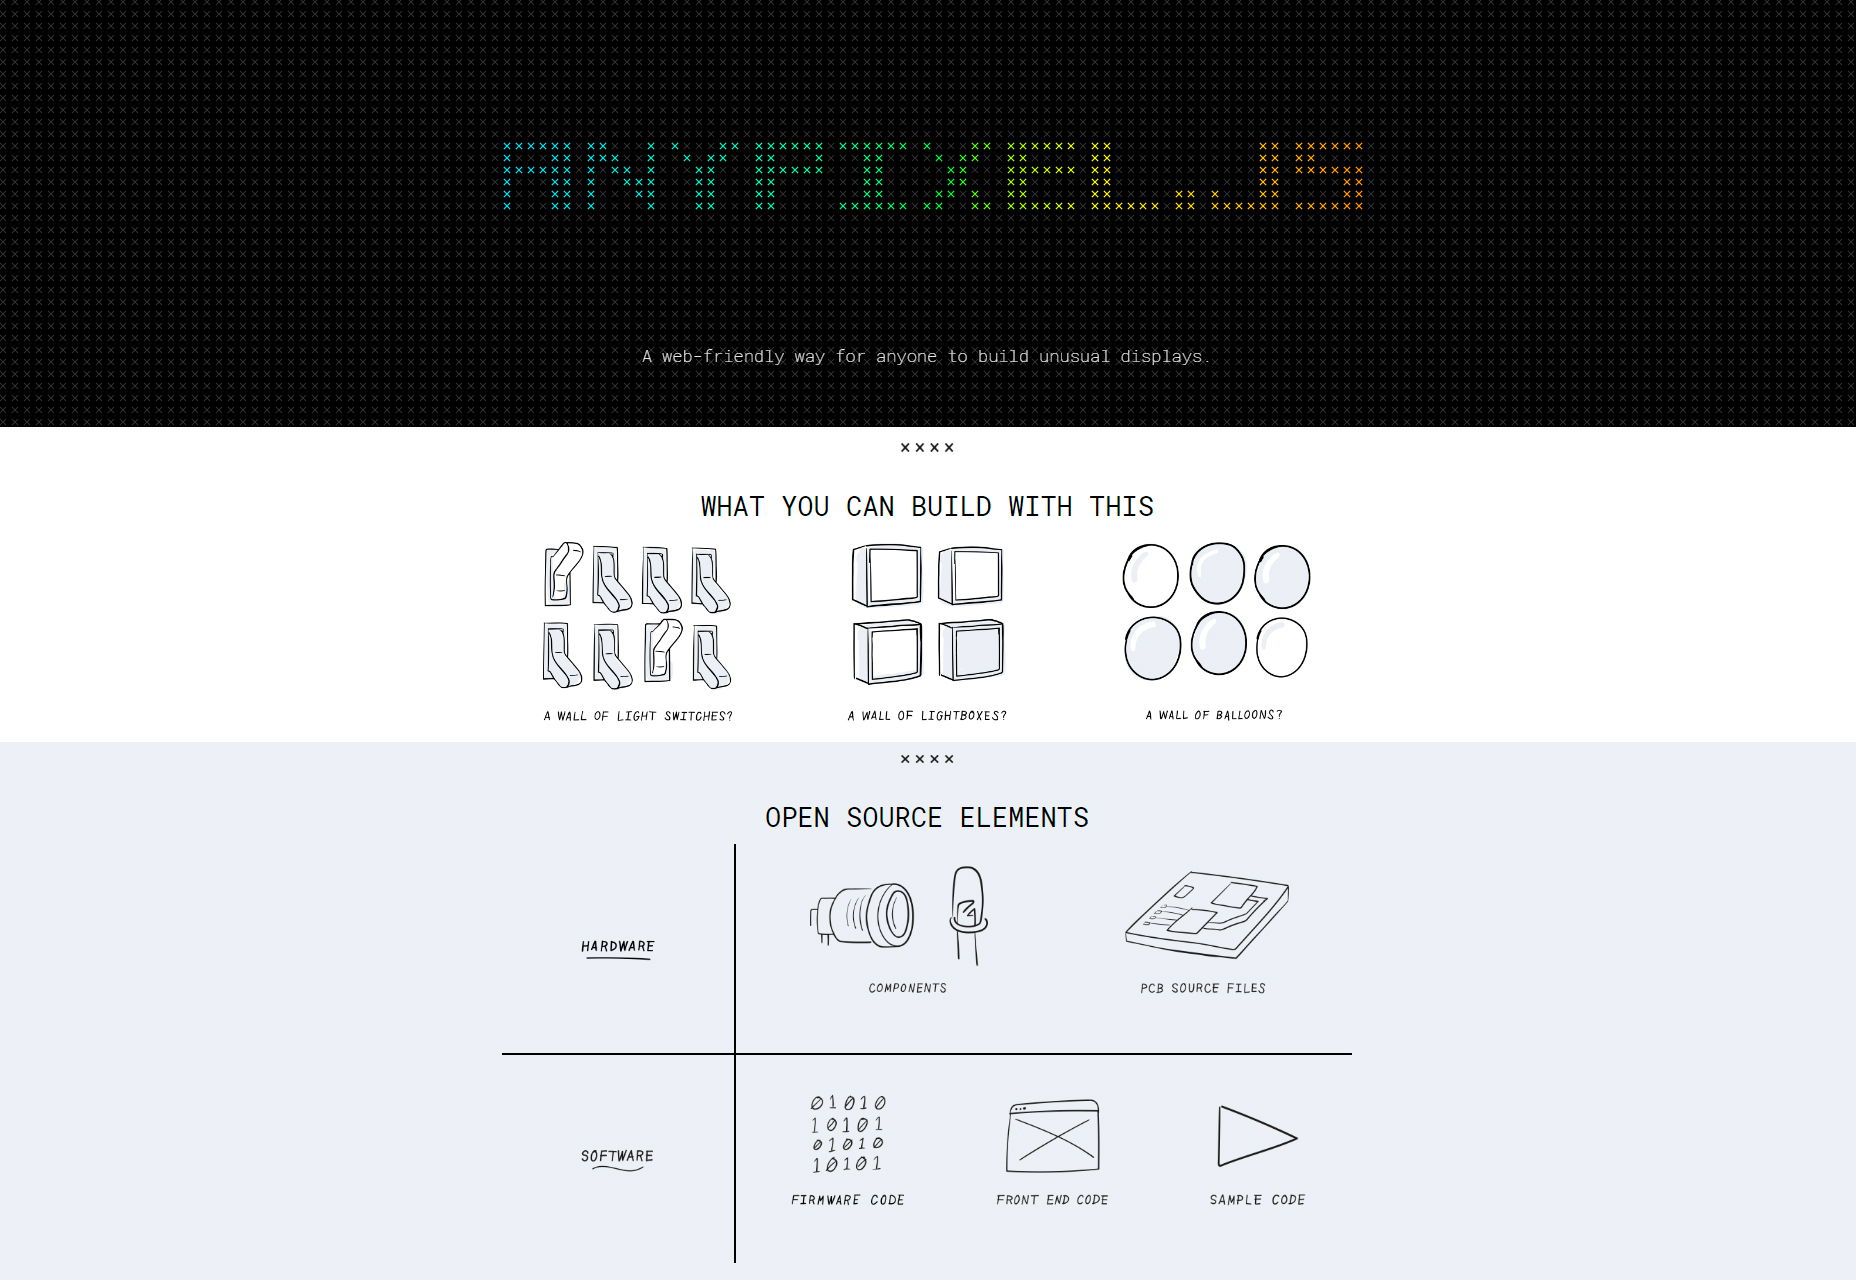 anypixeljs-software-hardware-displays-framework